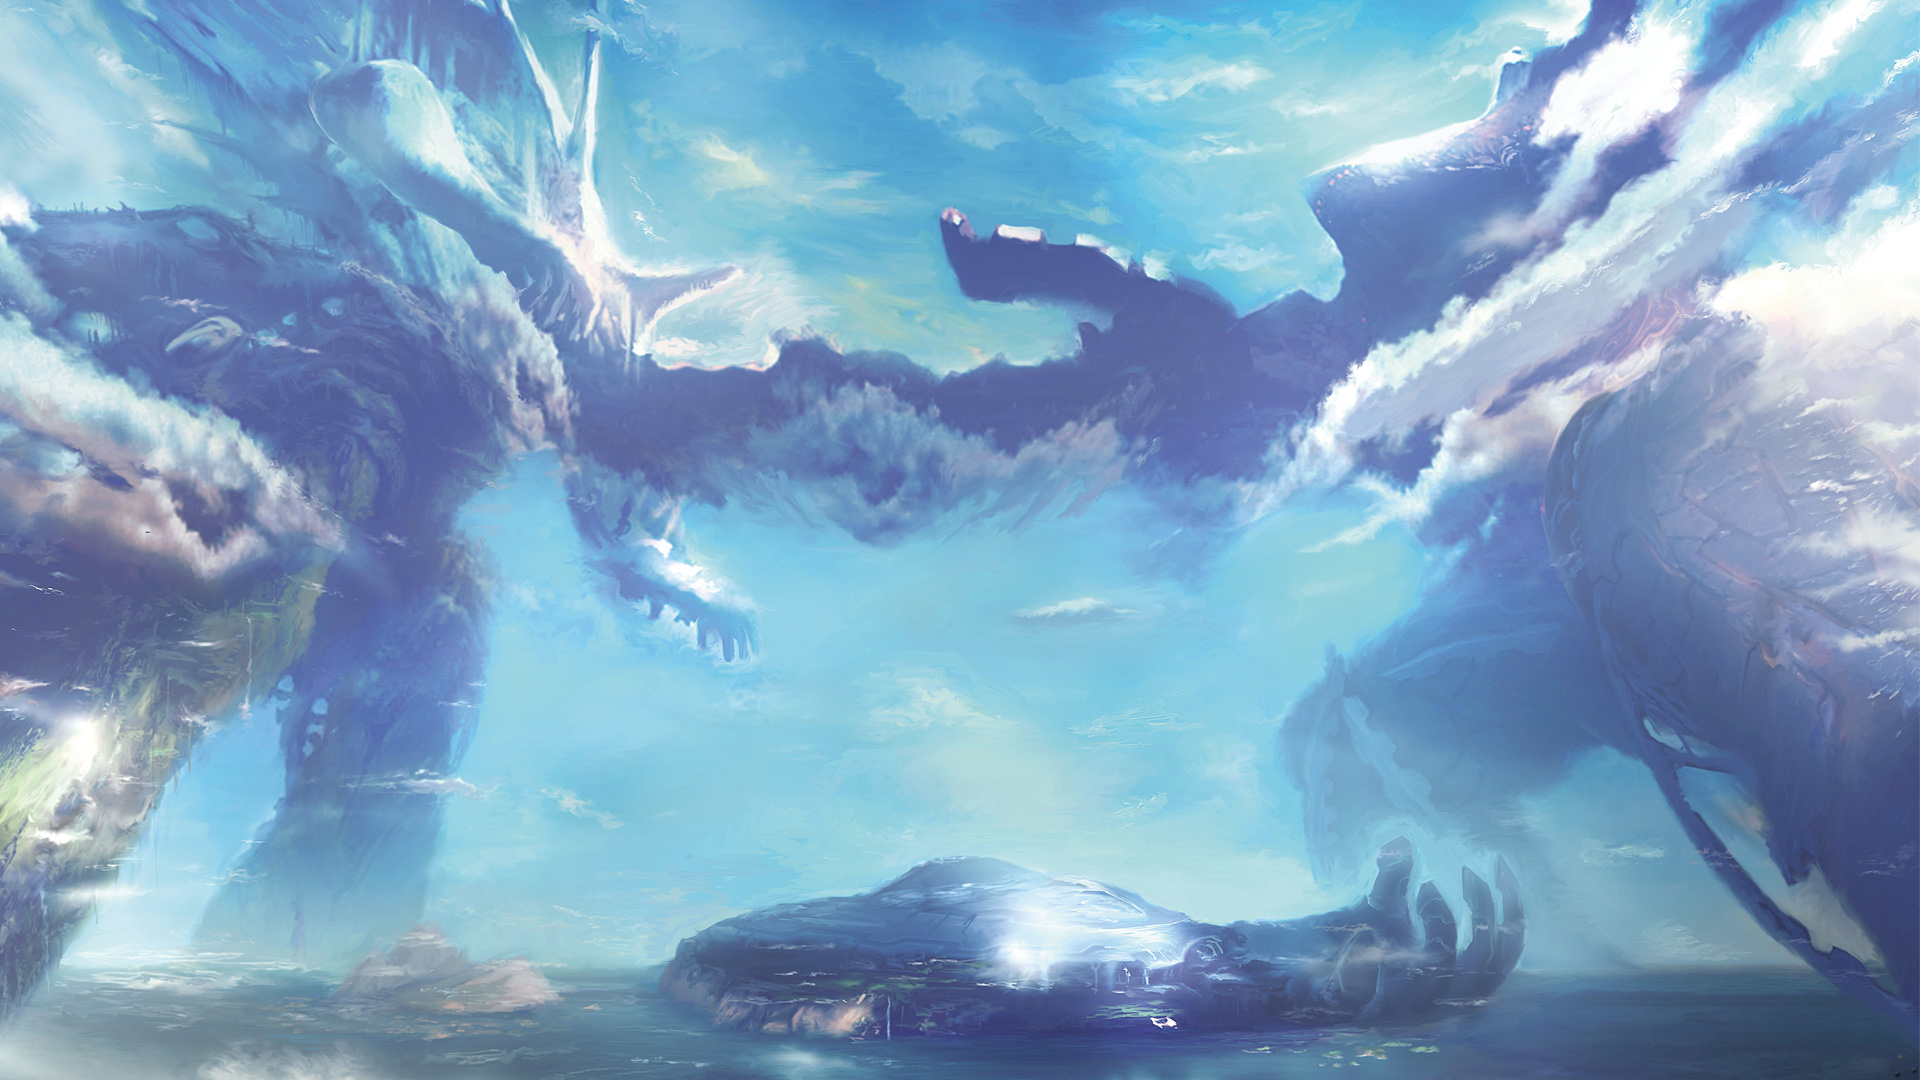 xenoblade chronicles wallpaper,sky,cg artwork,underwater,adventure game,world